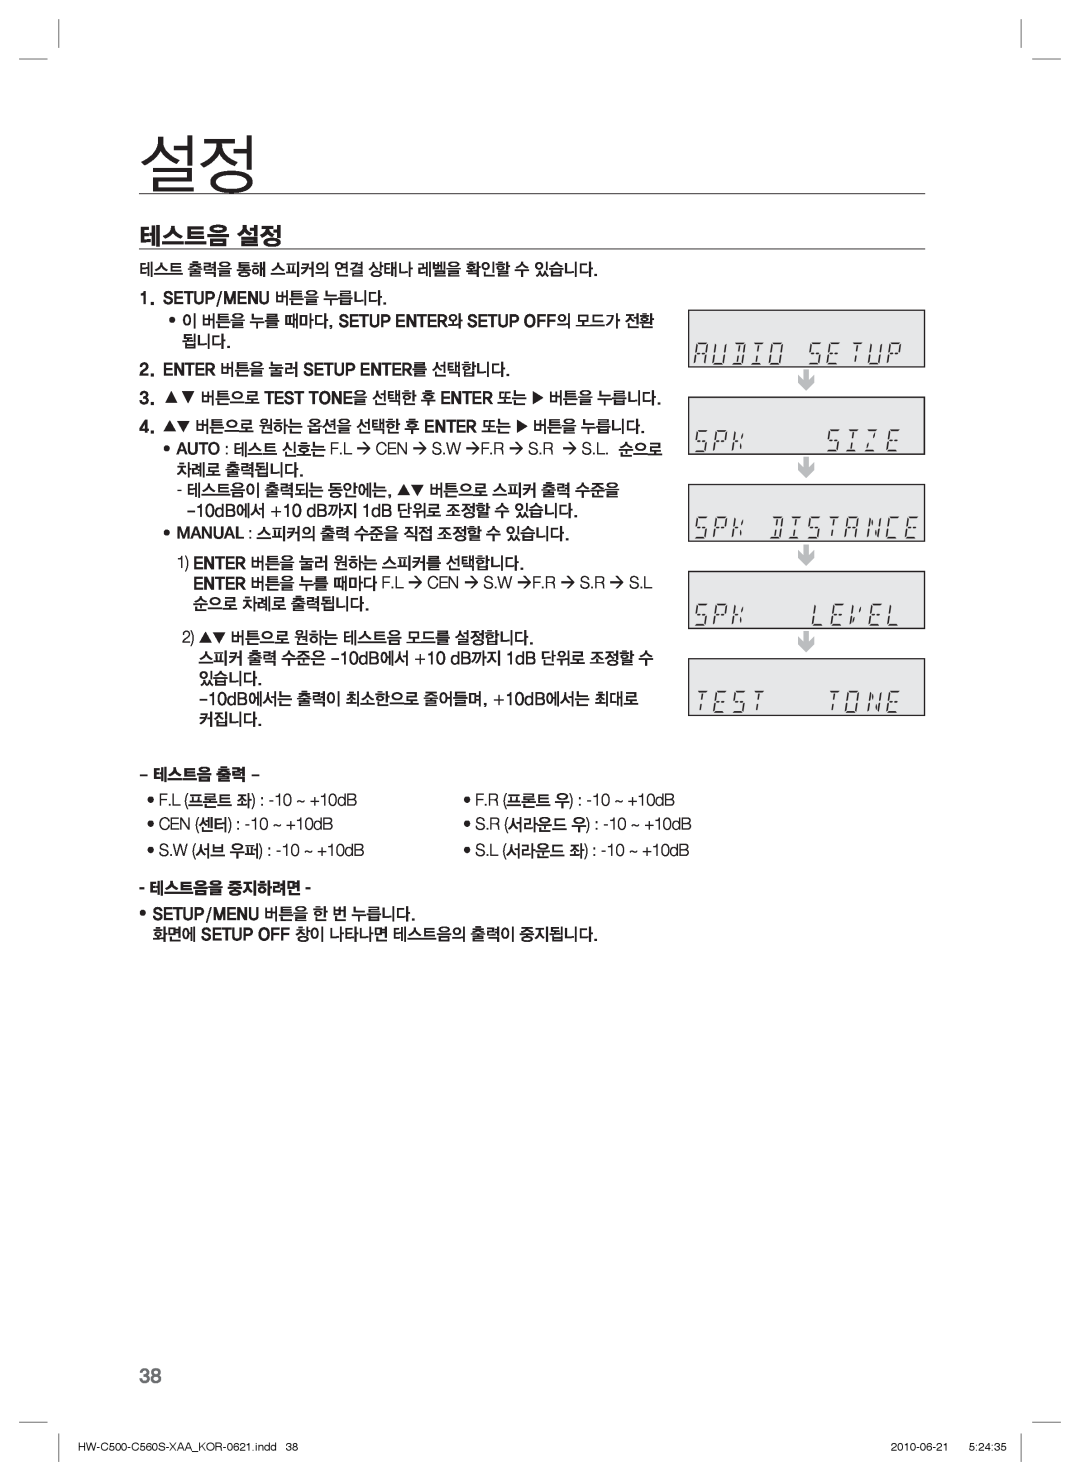 Samsung C560S manual 테스트음 설정 